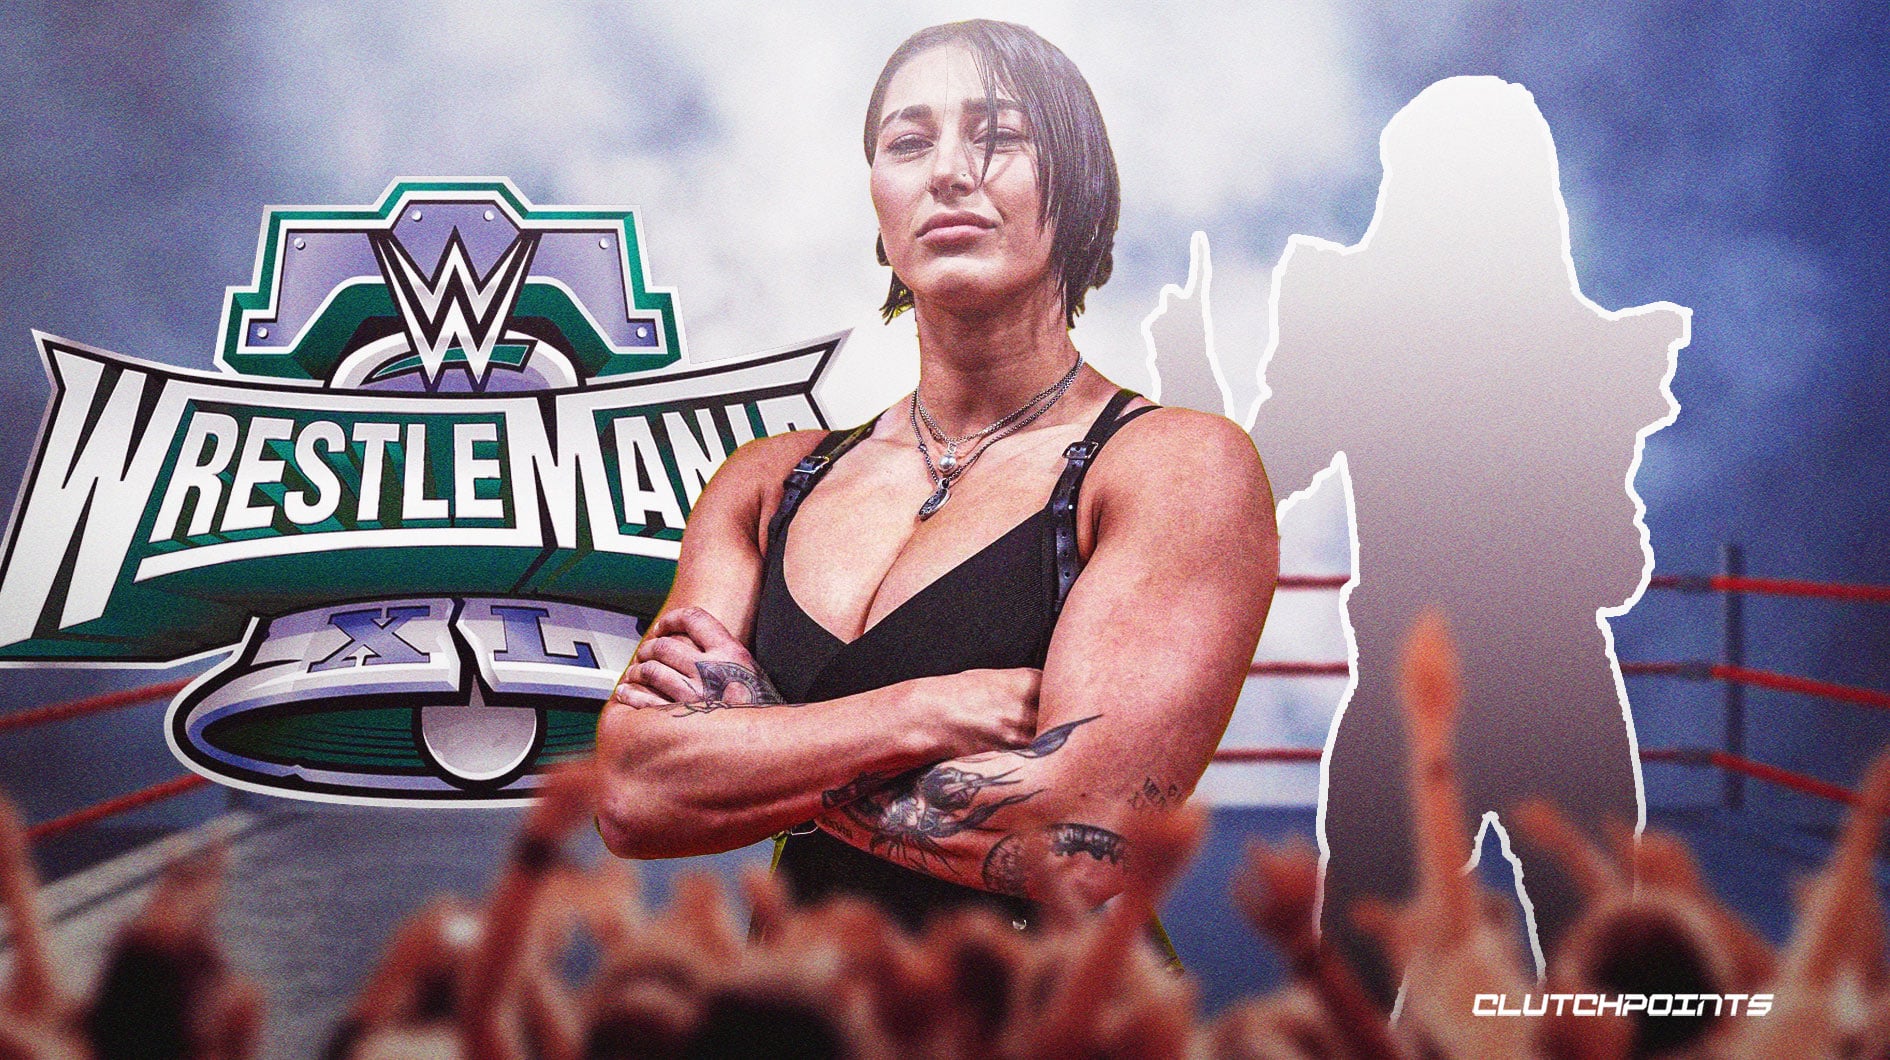 Becky Lynch accepts Rhea Ripley's challenge: WWE NXT, Nov. 20, 2019 